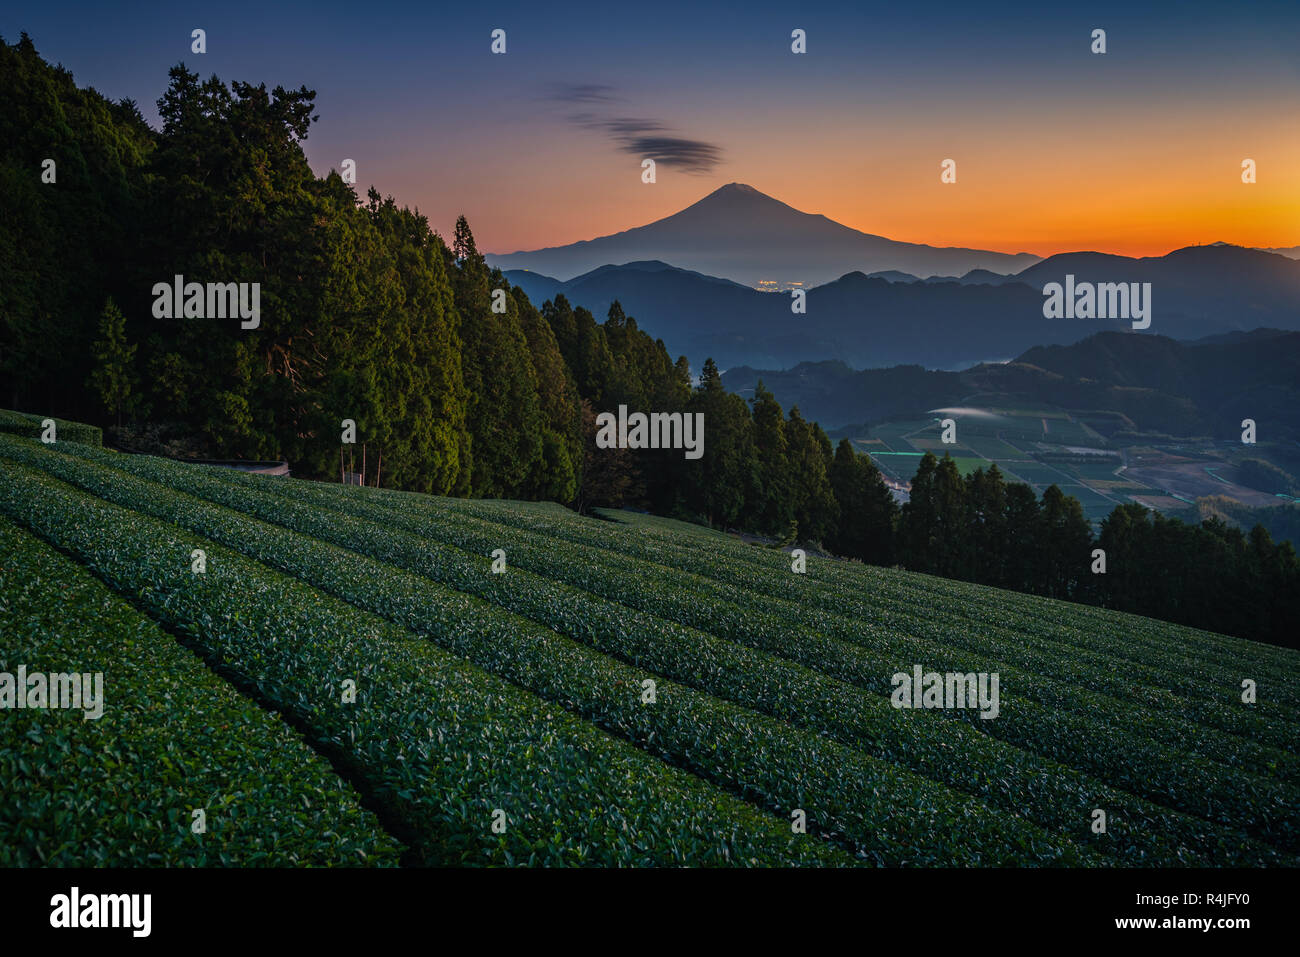 Mt. Fuji with green tea field at sunrise in Shizuoka, Japan. Stock Photo